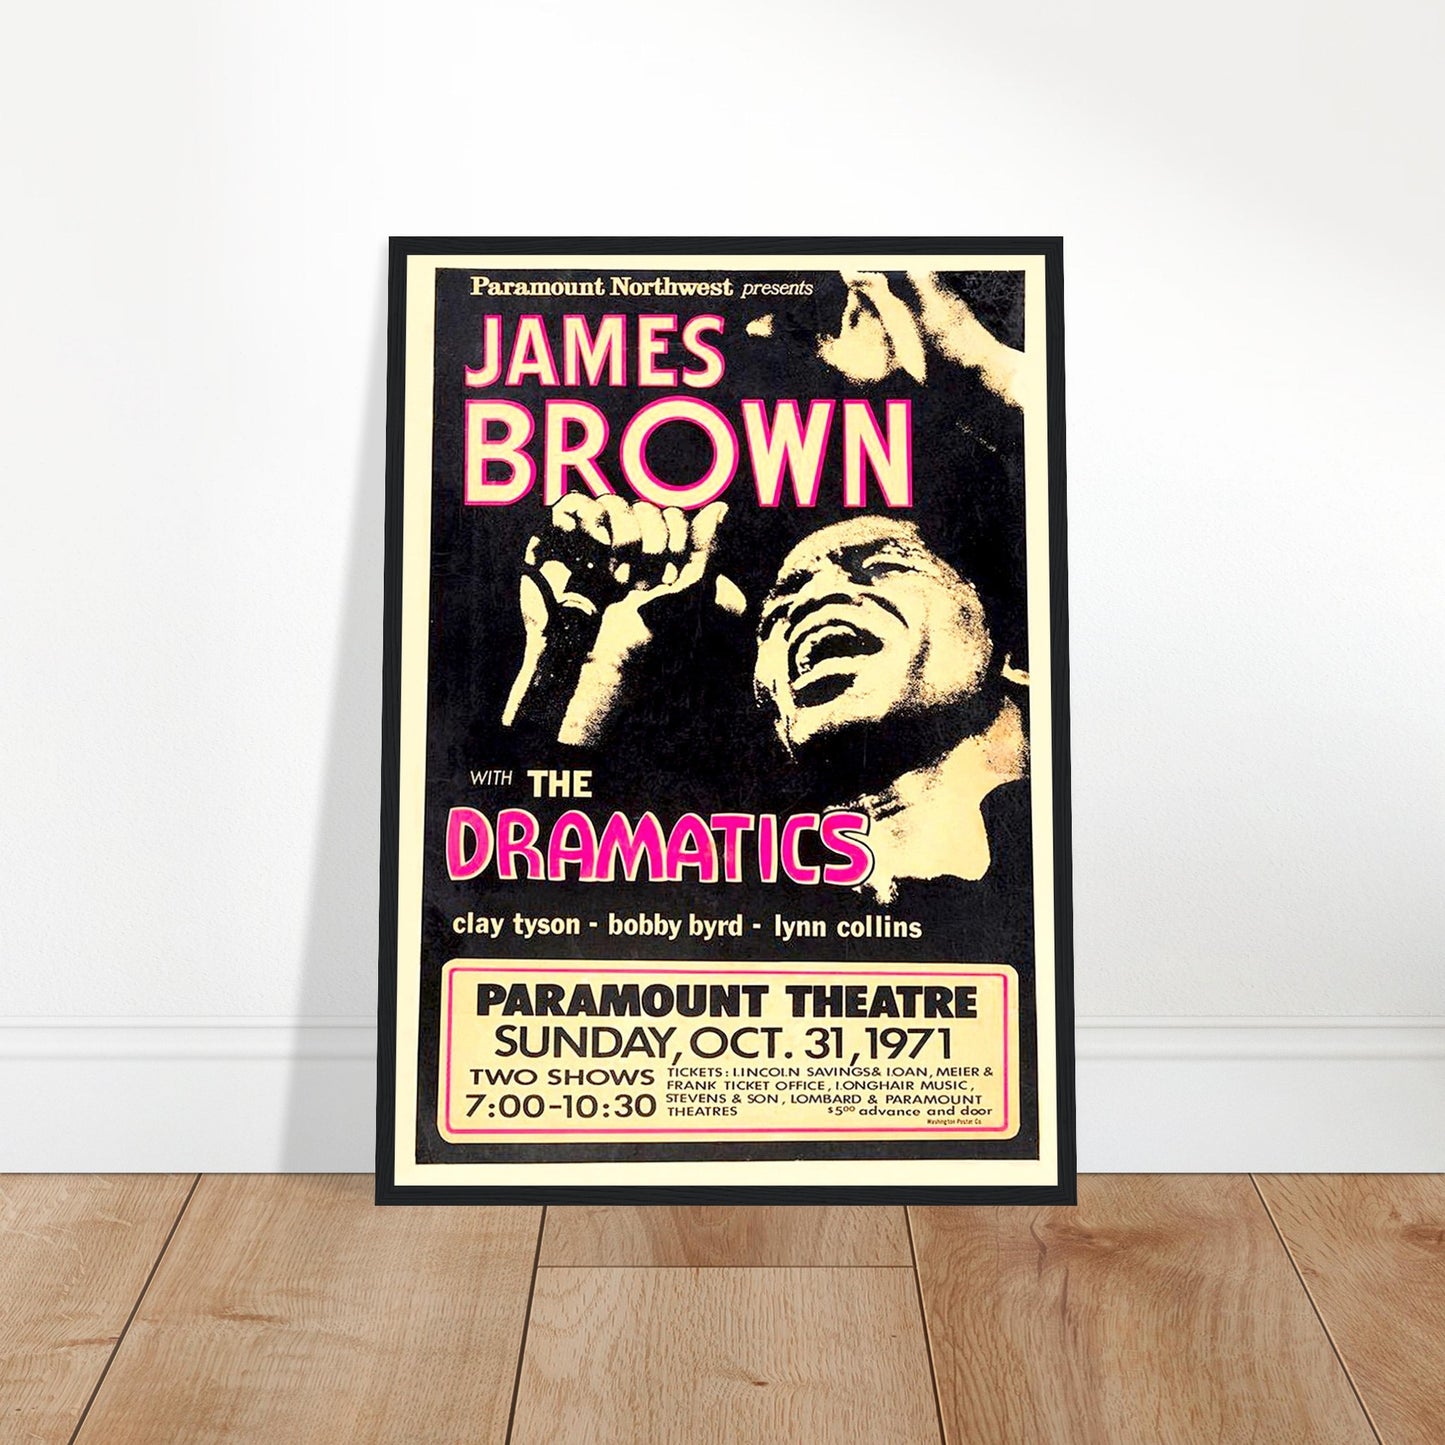 James Brown Vintage Poster Reprint on Premium Matte Paper - Posterify